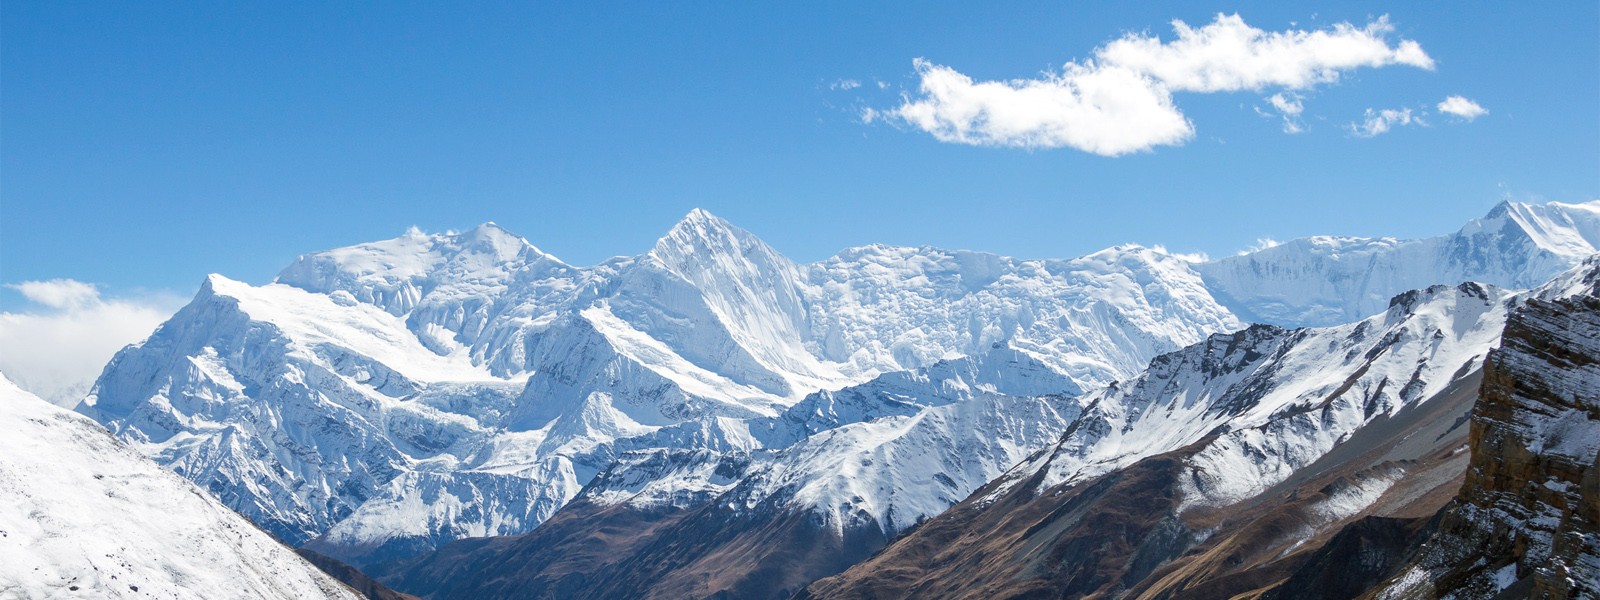 Mount Annapurna IV Expedition